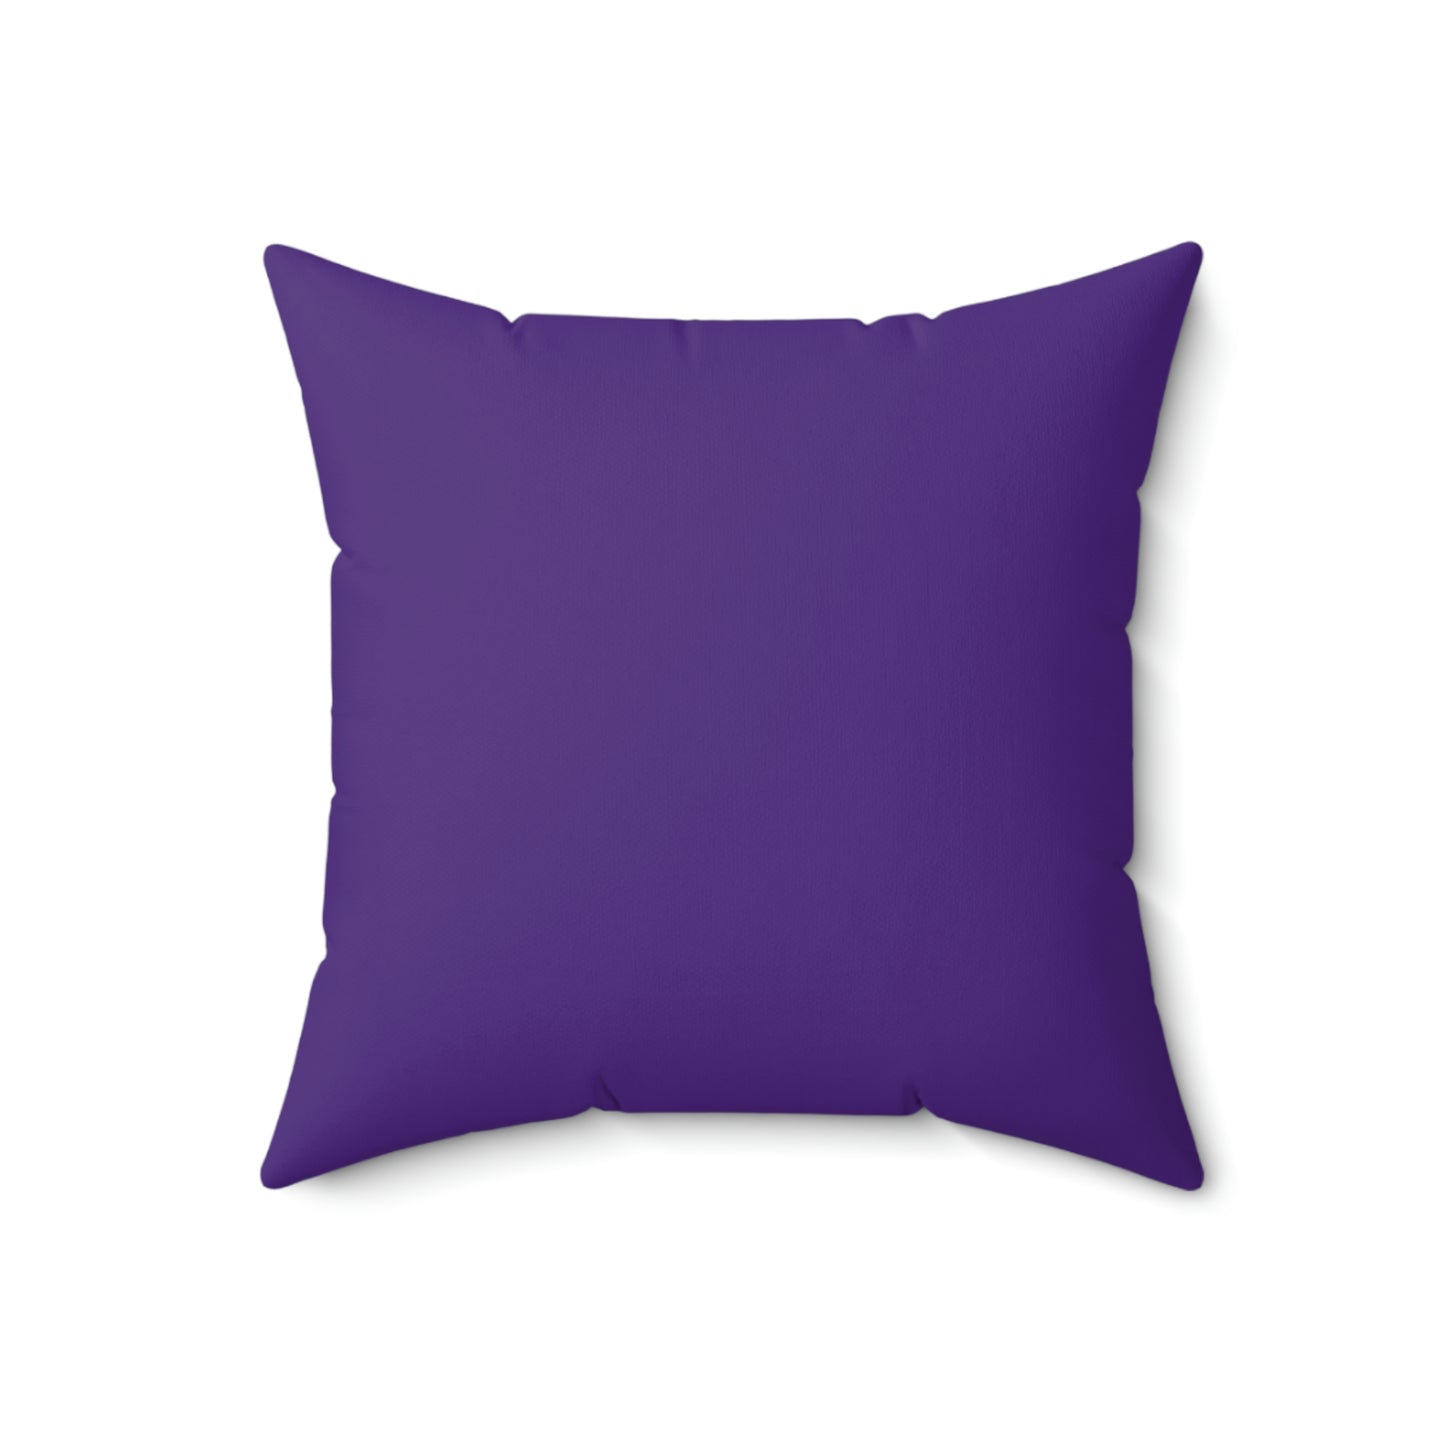 Spun Polyester Square Pillow Case “Moth Black on Purple”